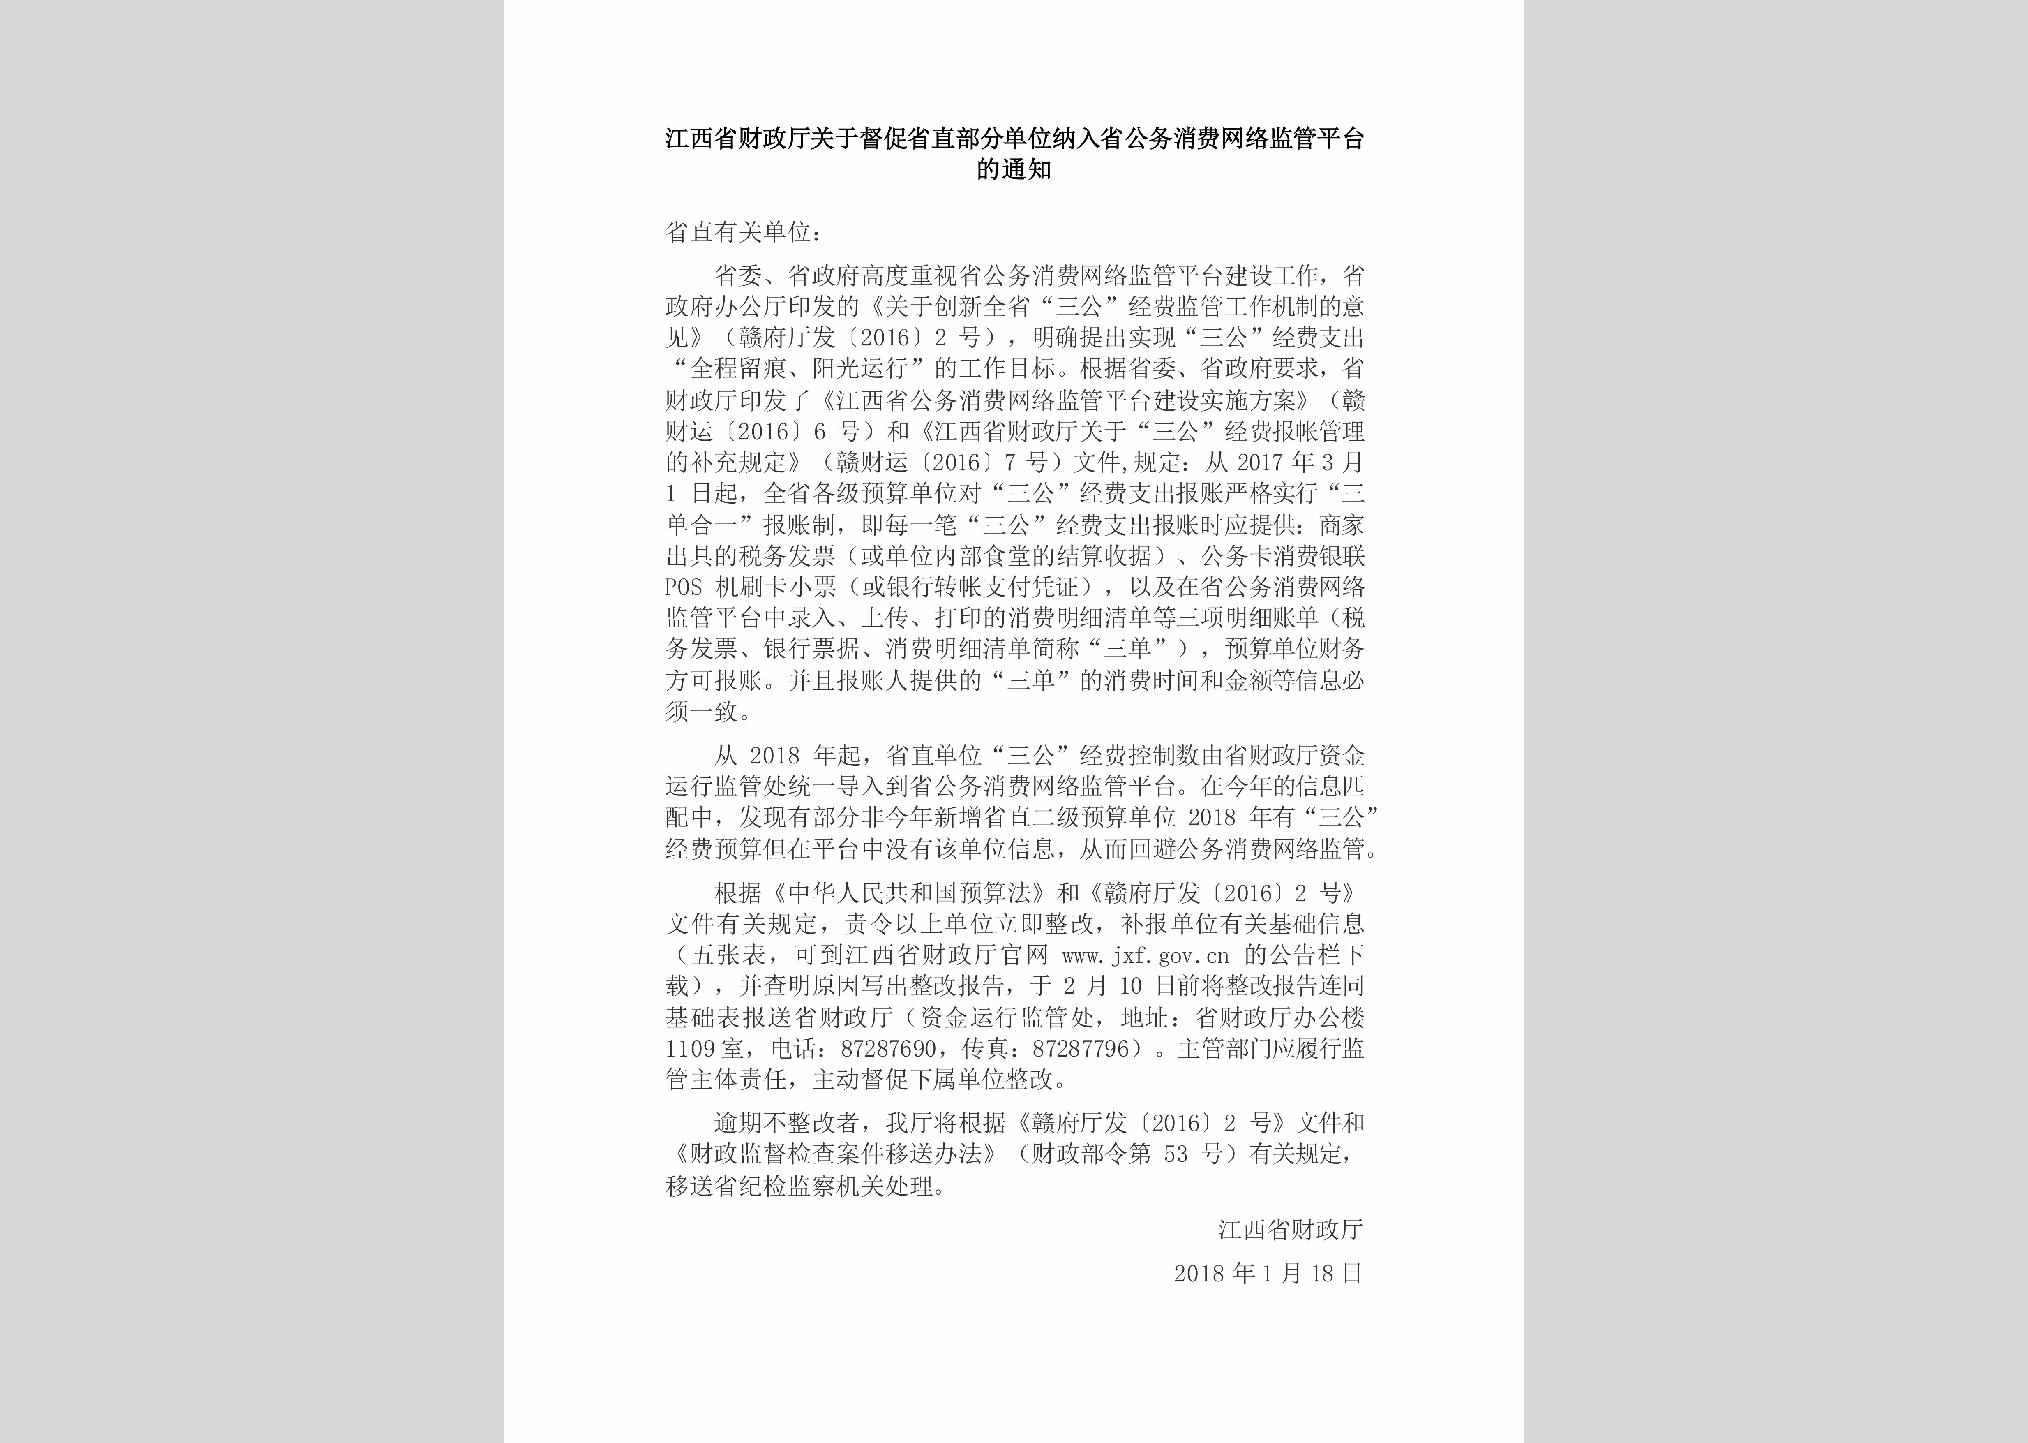 JX-DCSBFDWB-2018：江西省财政厅关于督促省直部分单位纳入省公务消费网络监管平台的通知